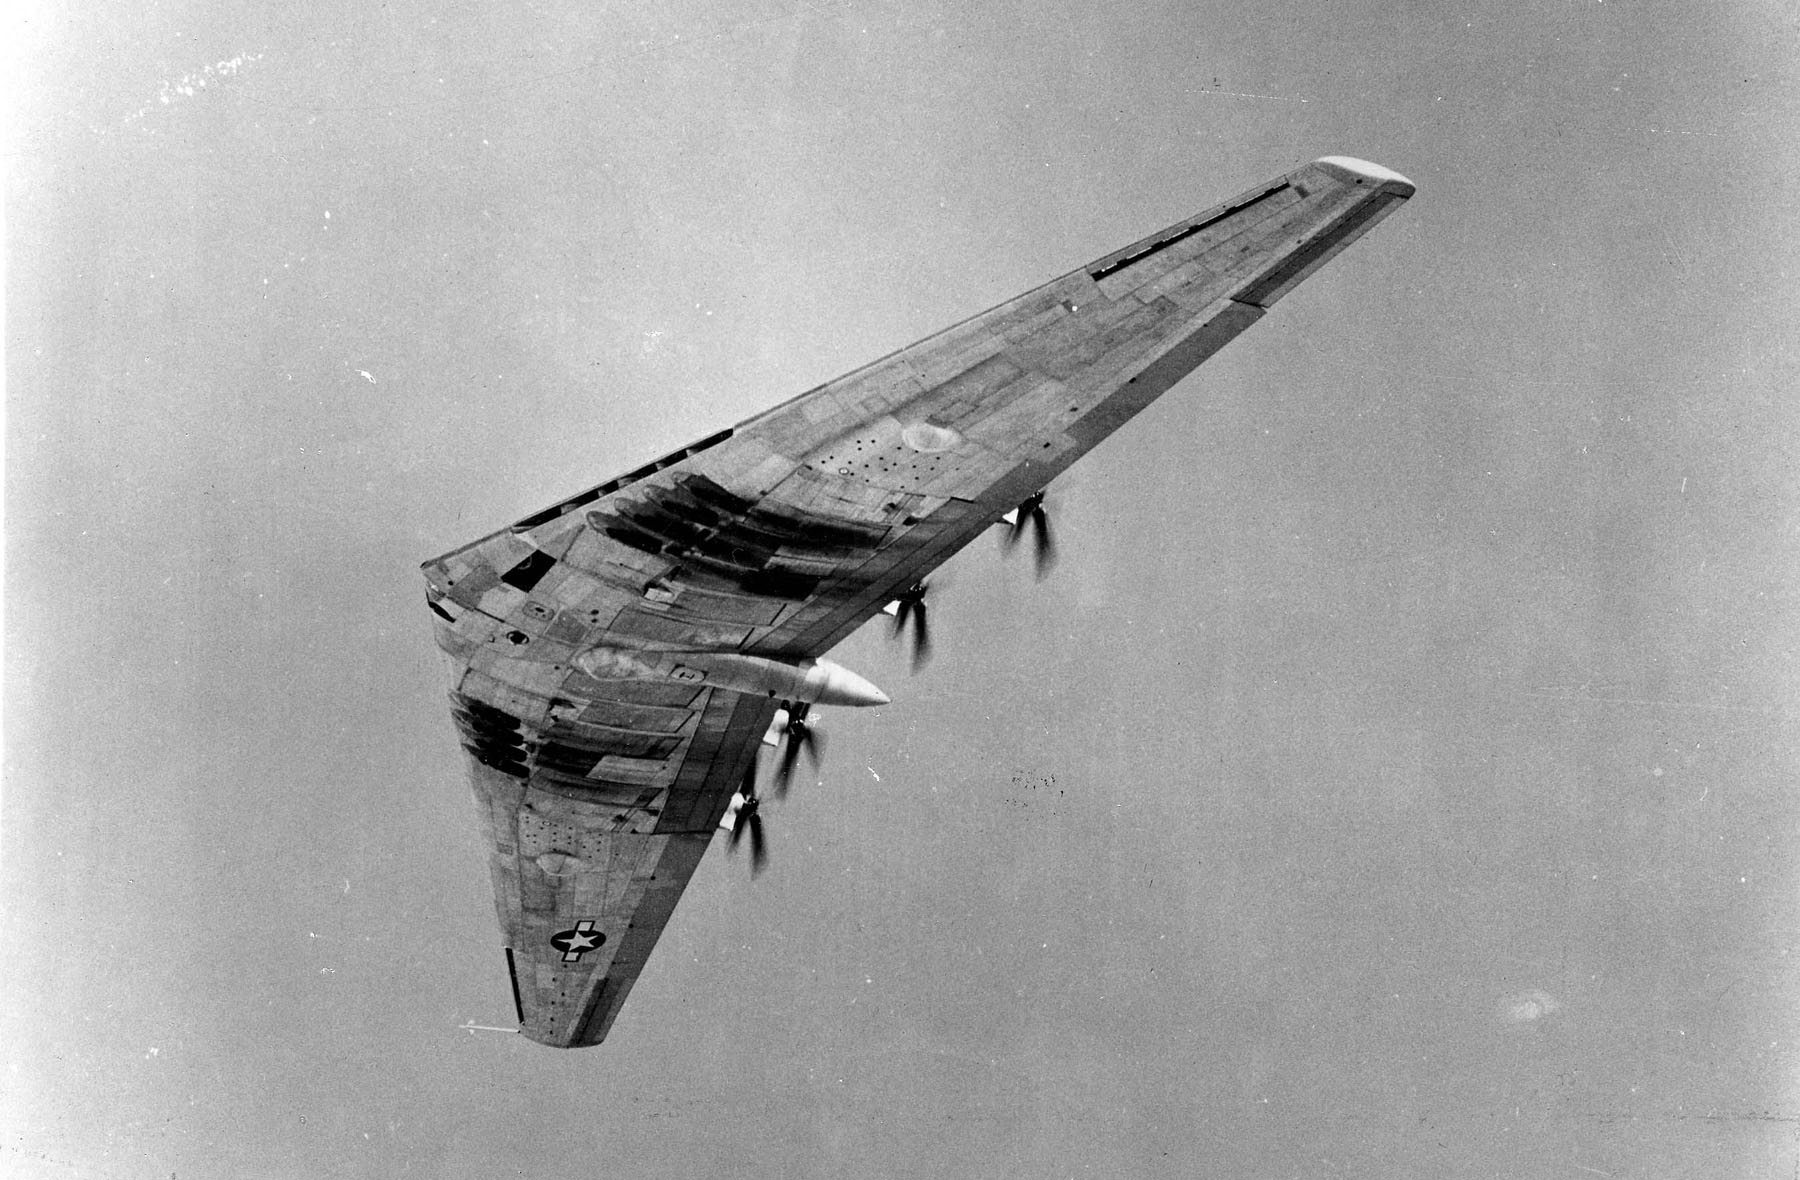 Northrop XB-35 in flight. (U.S. Air Force)